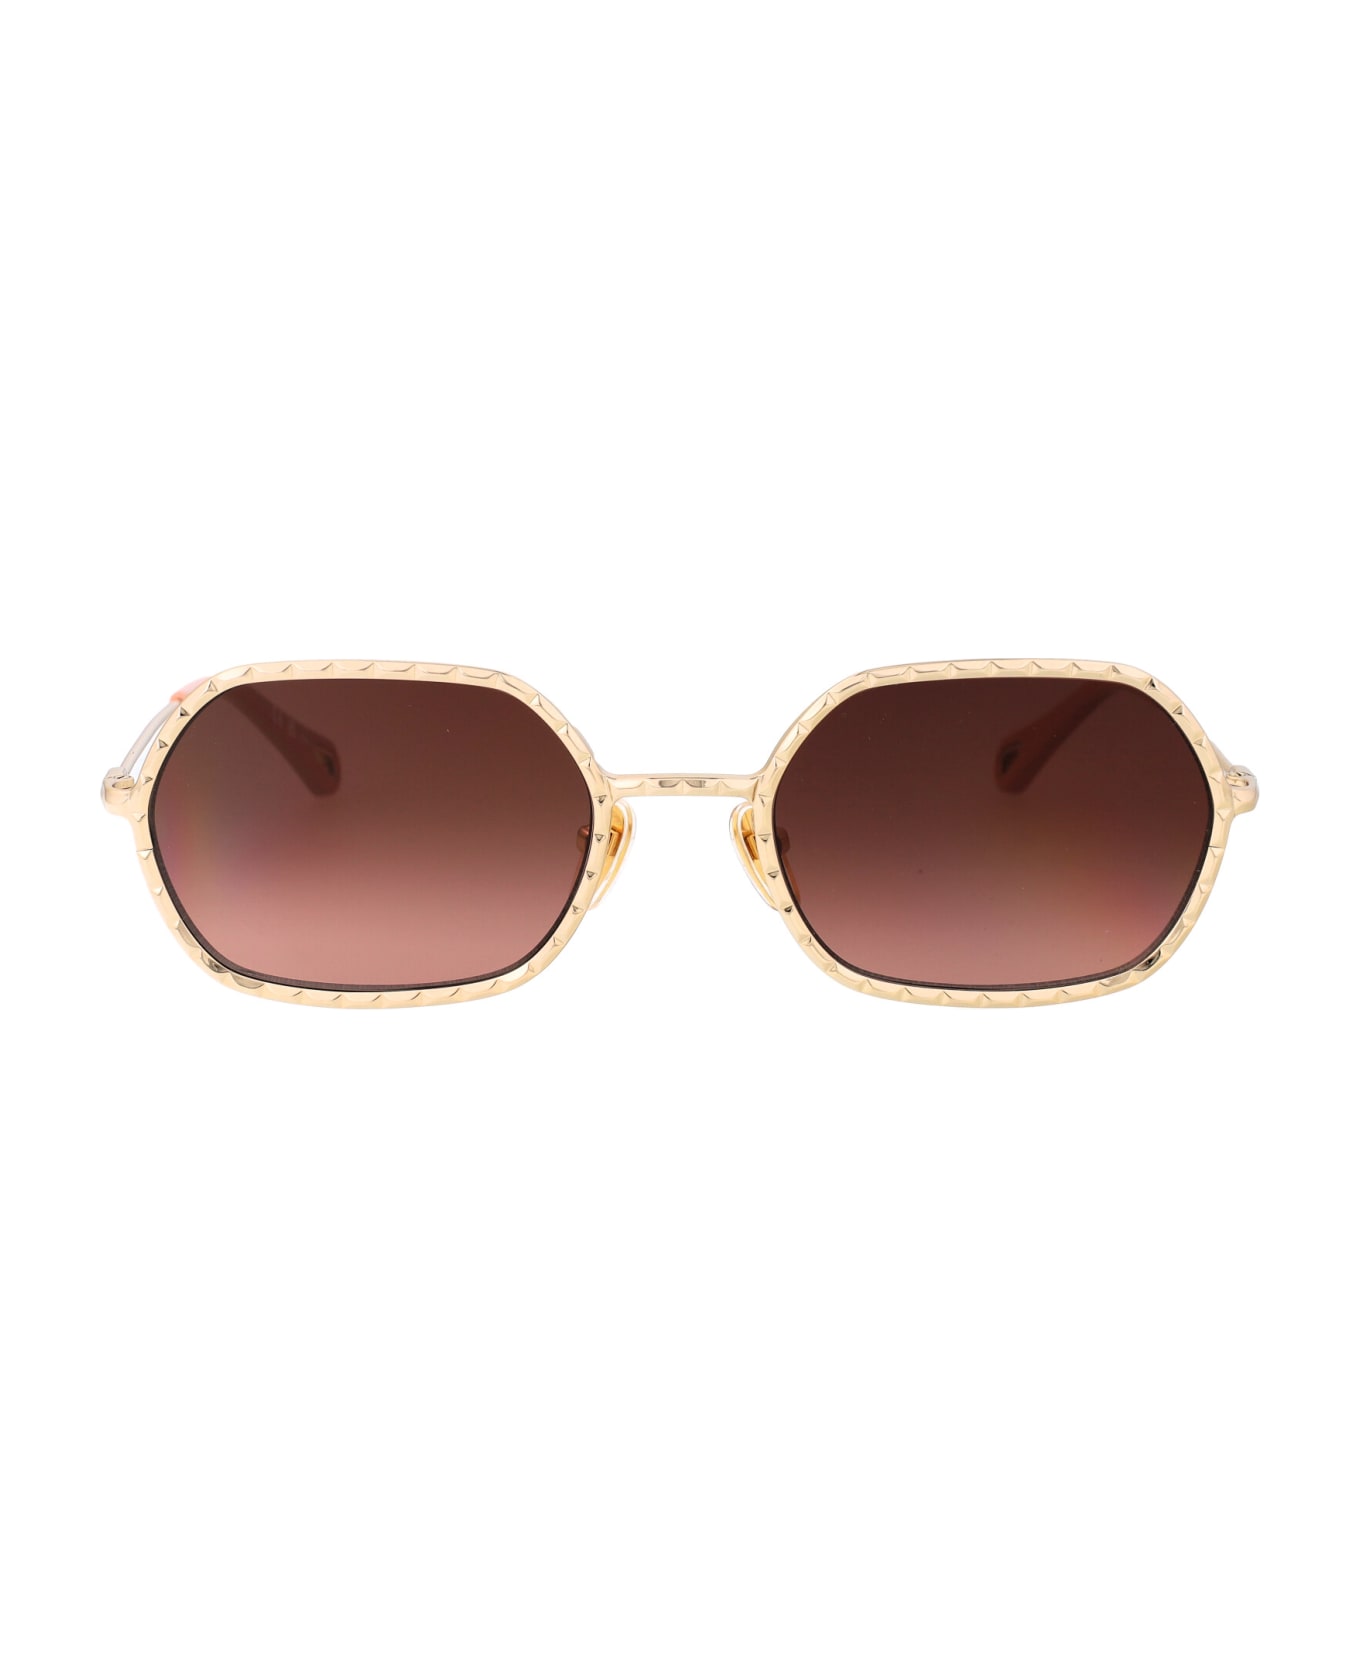 Chloé Eyewear Ch0231s Sunglasses - 002 GOLD GOLD COPPER サングラス